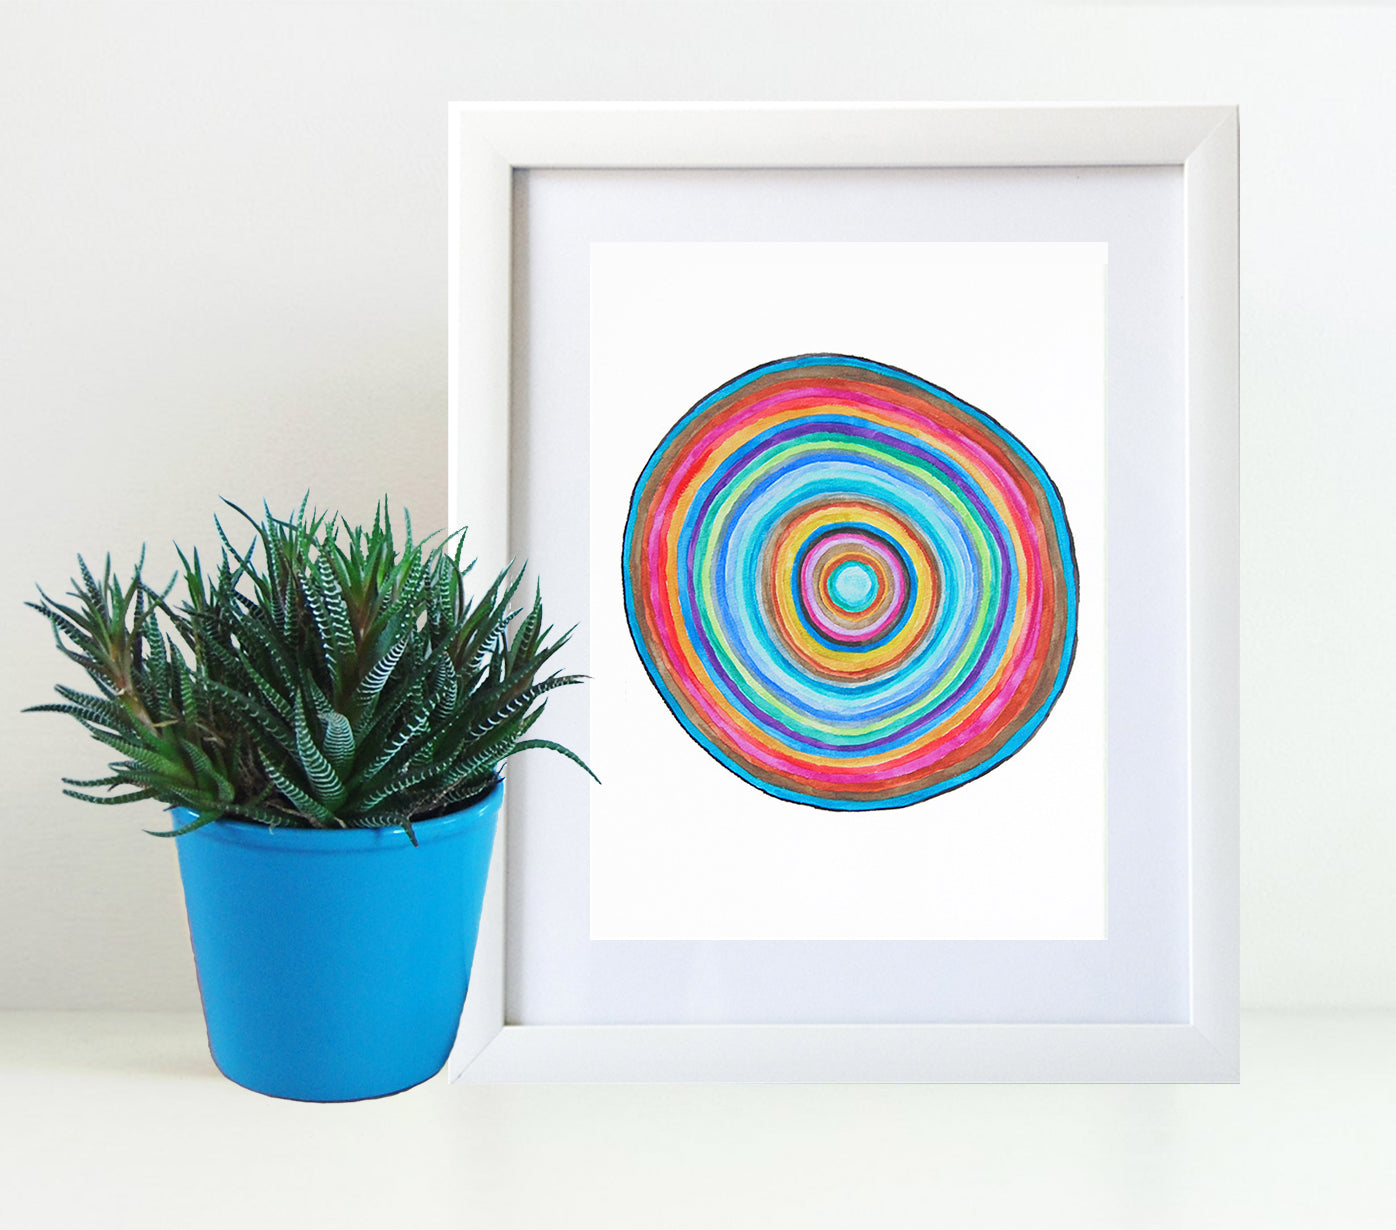 Rainbow Circle 8x10 Art Print by Tanya Madoff shown in frame